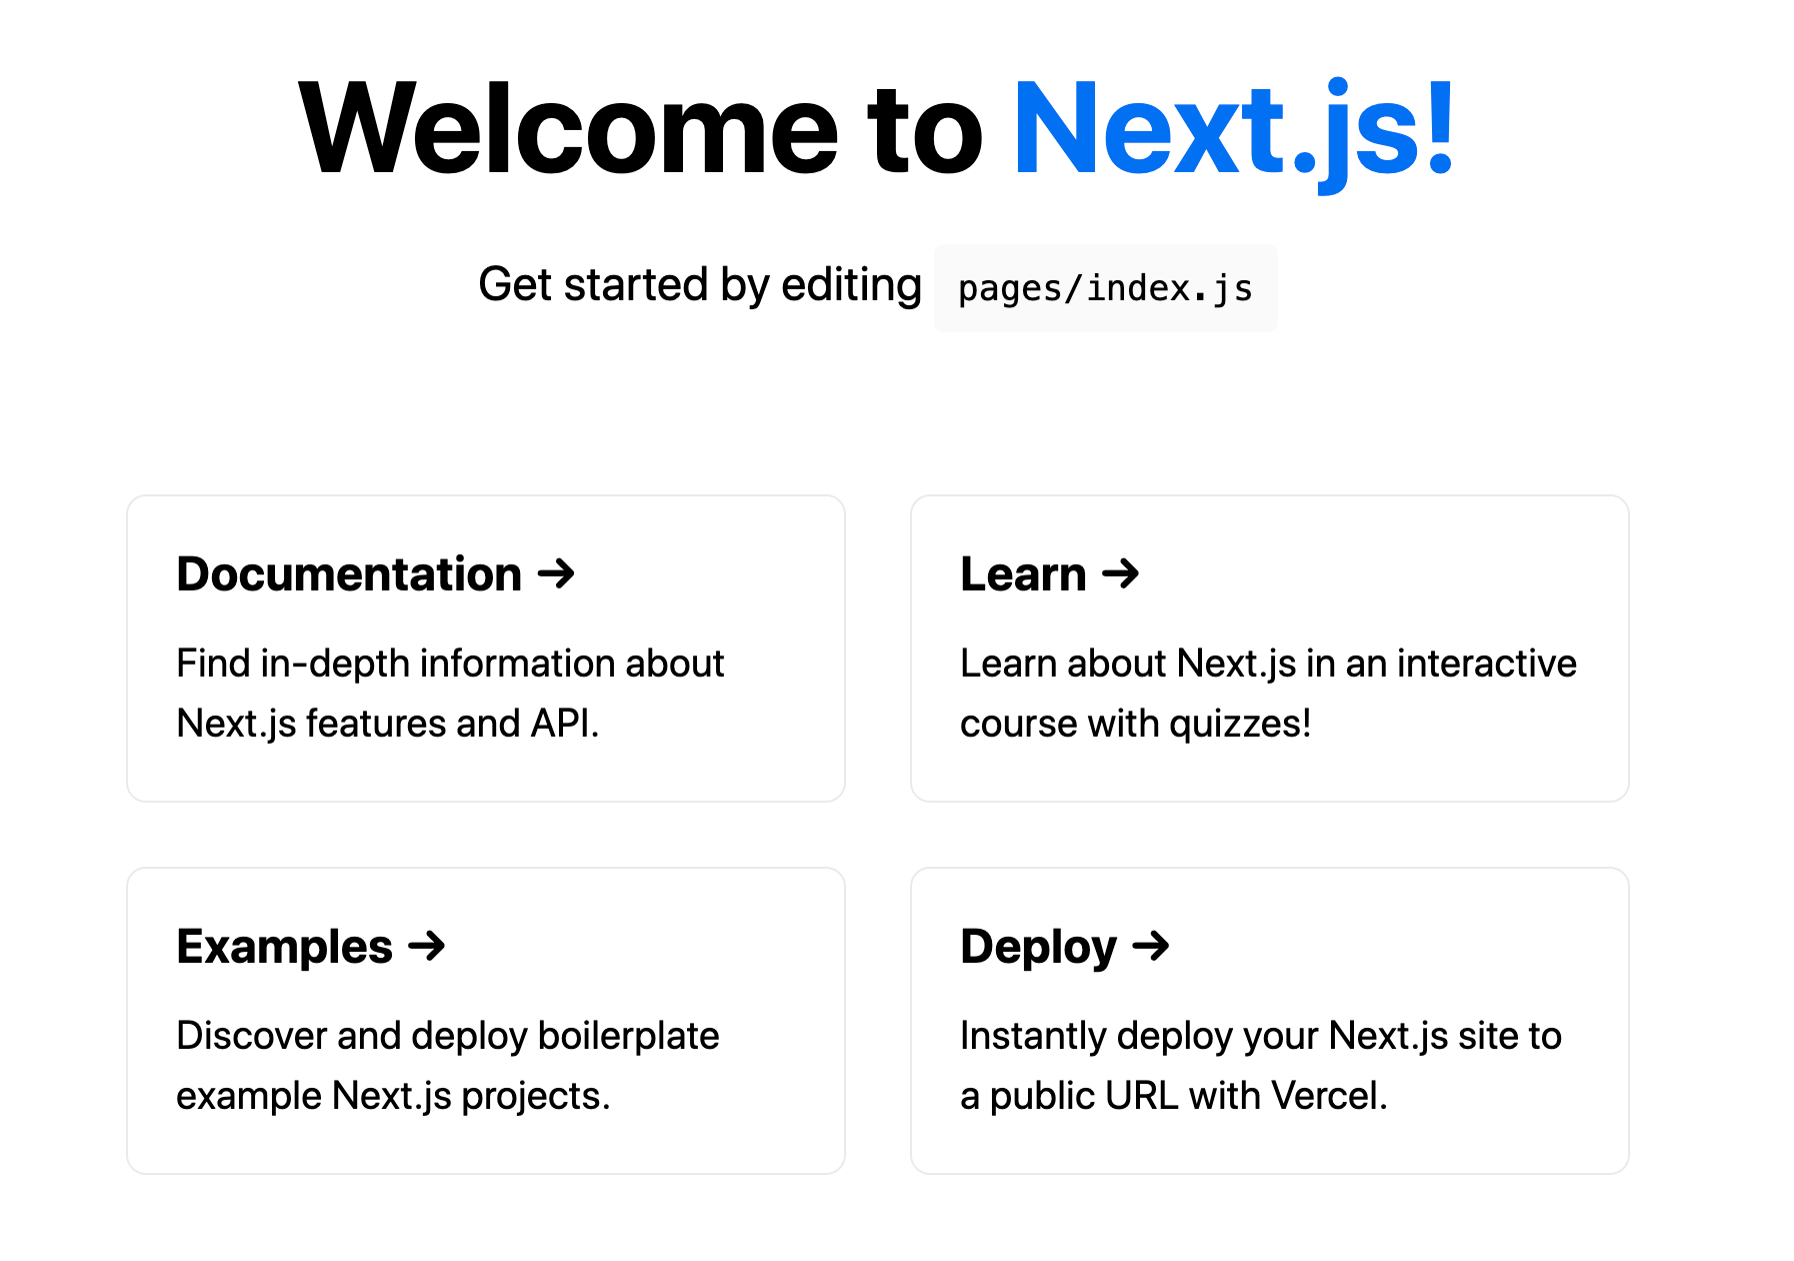 Next.js local development site running on http://localhost:3000